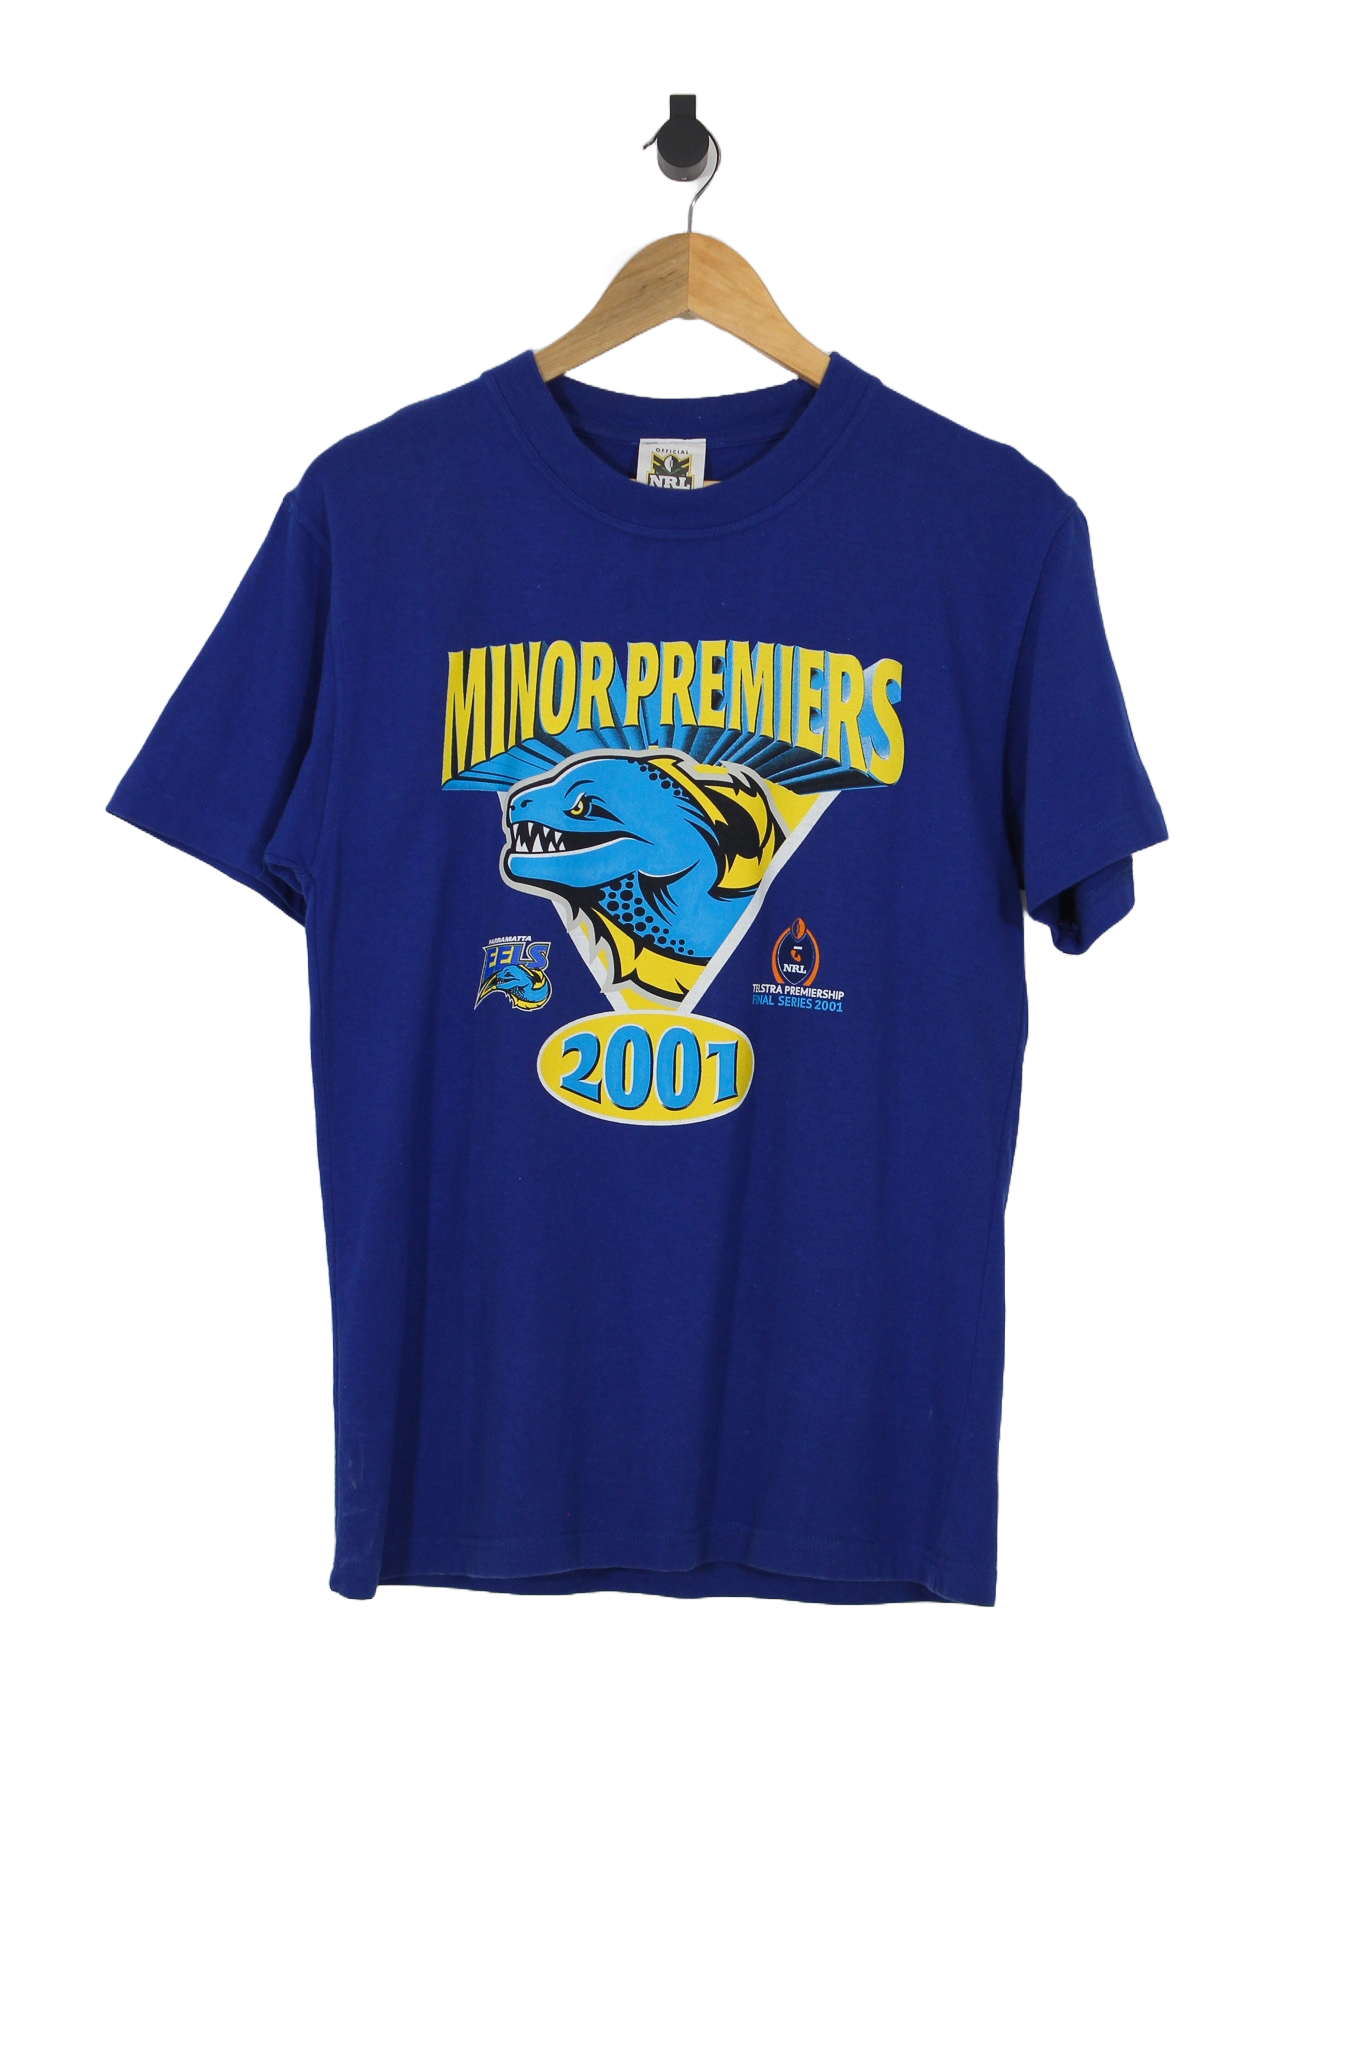 Vintage 2001 Parramatta Eels Minor Premiers NRL T-Shirt - S